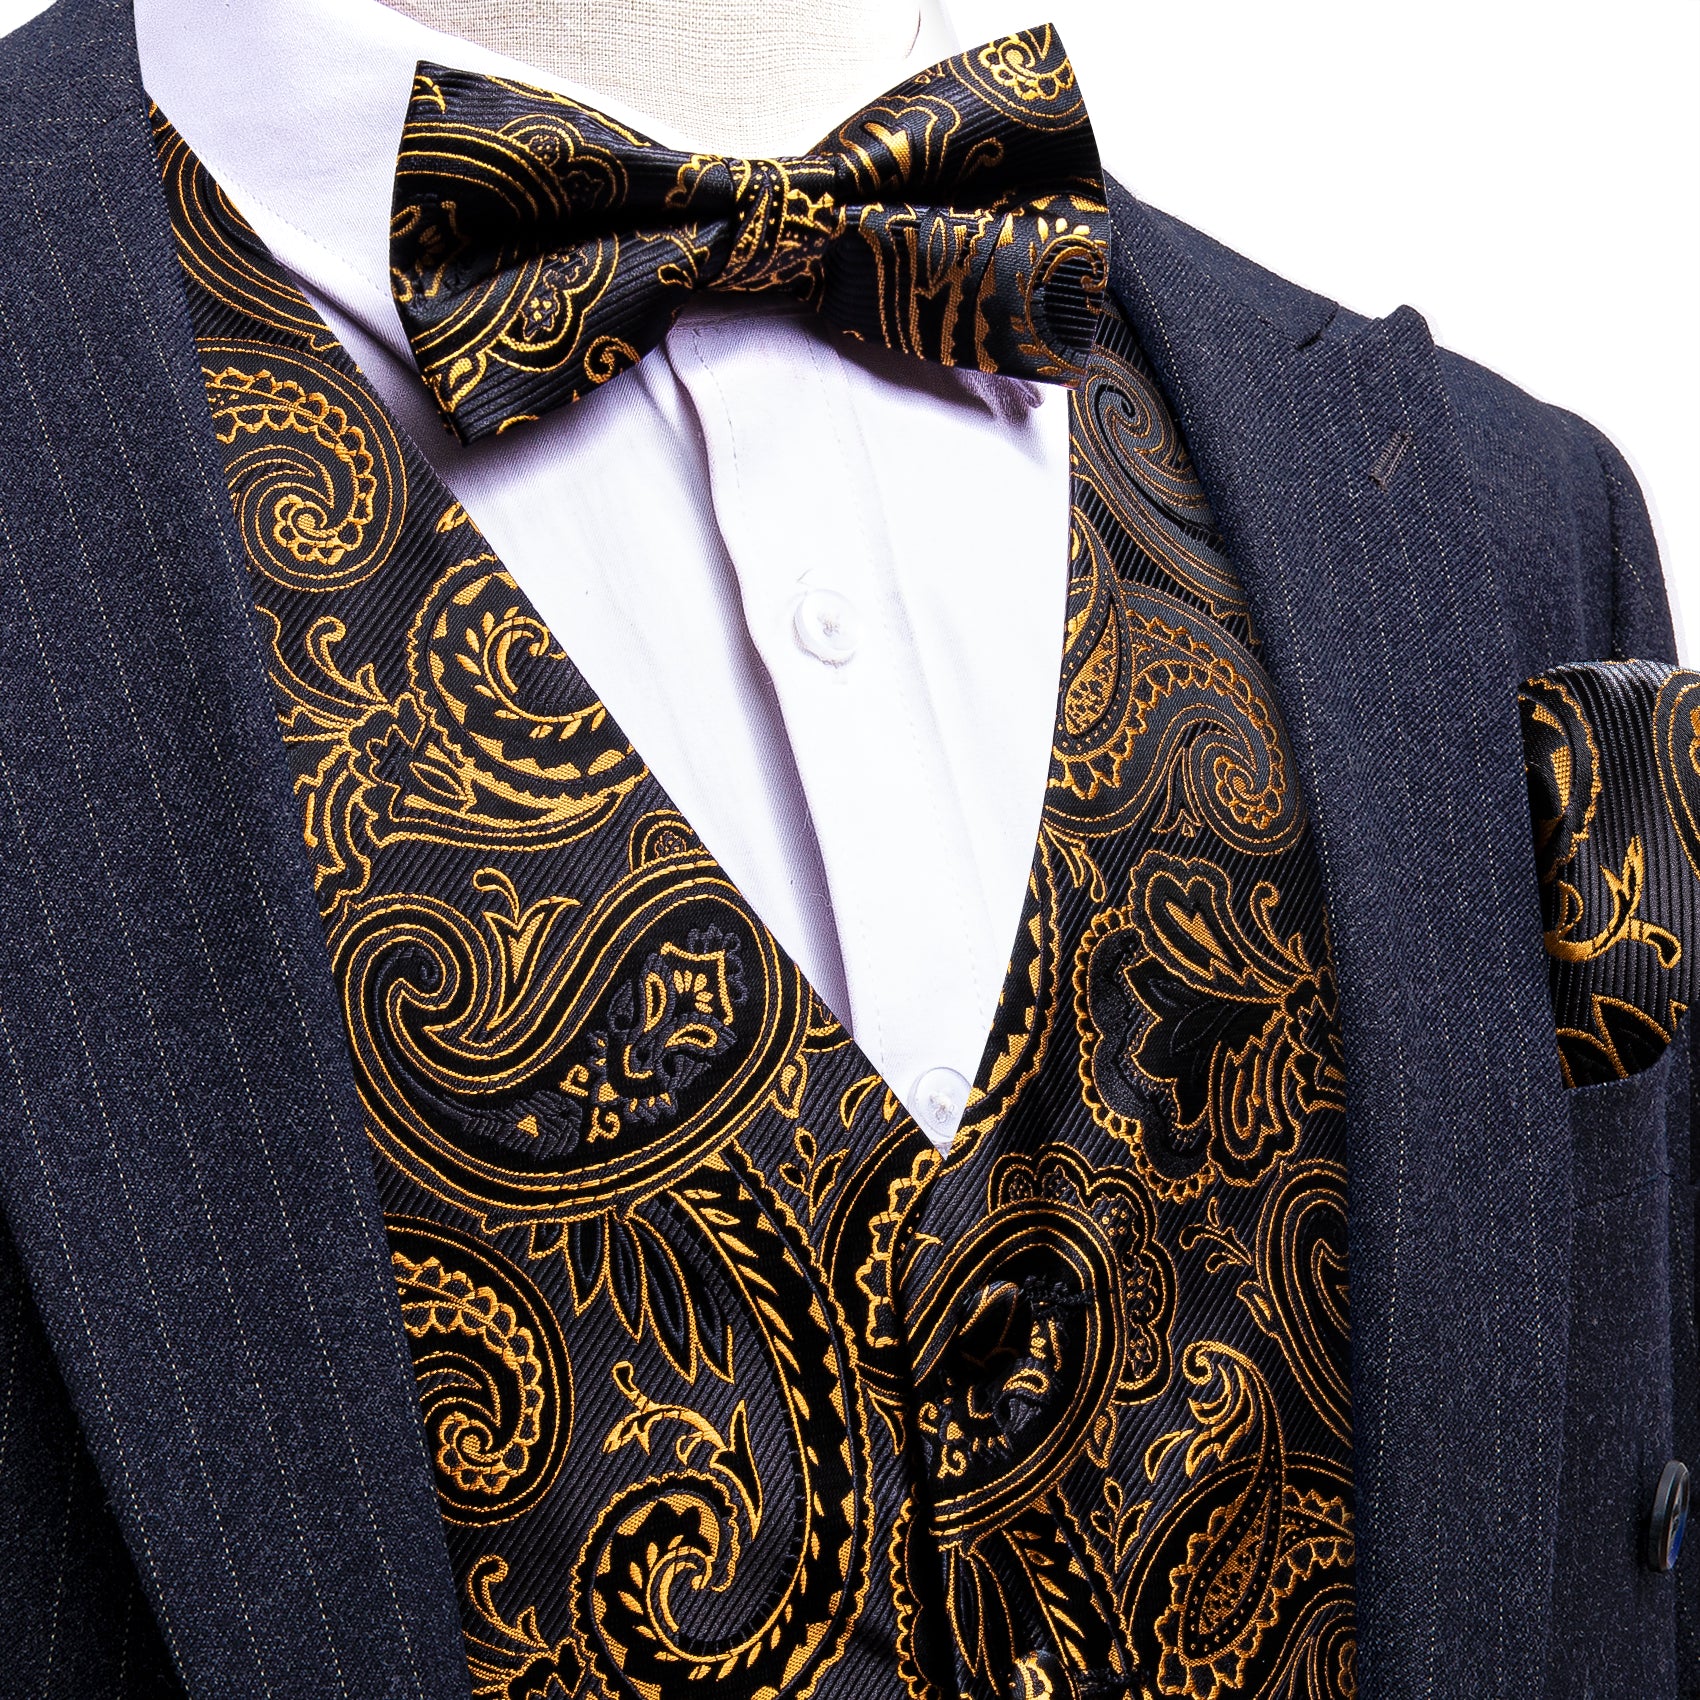 Men's Black Gold Paisley Silk Vest Bow tie Pocket square Cufflinks Set